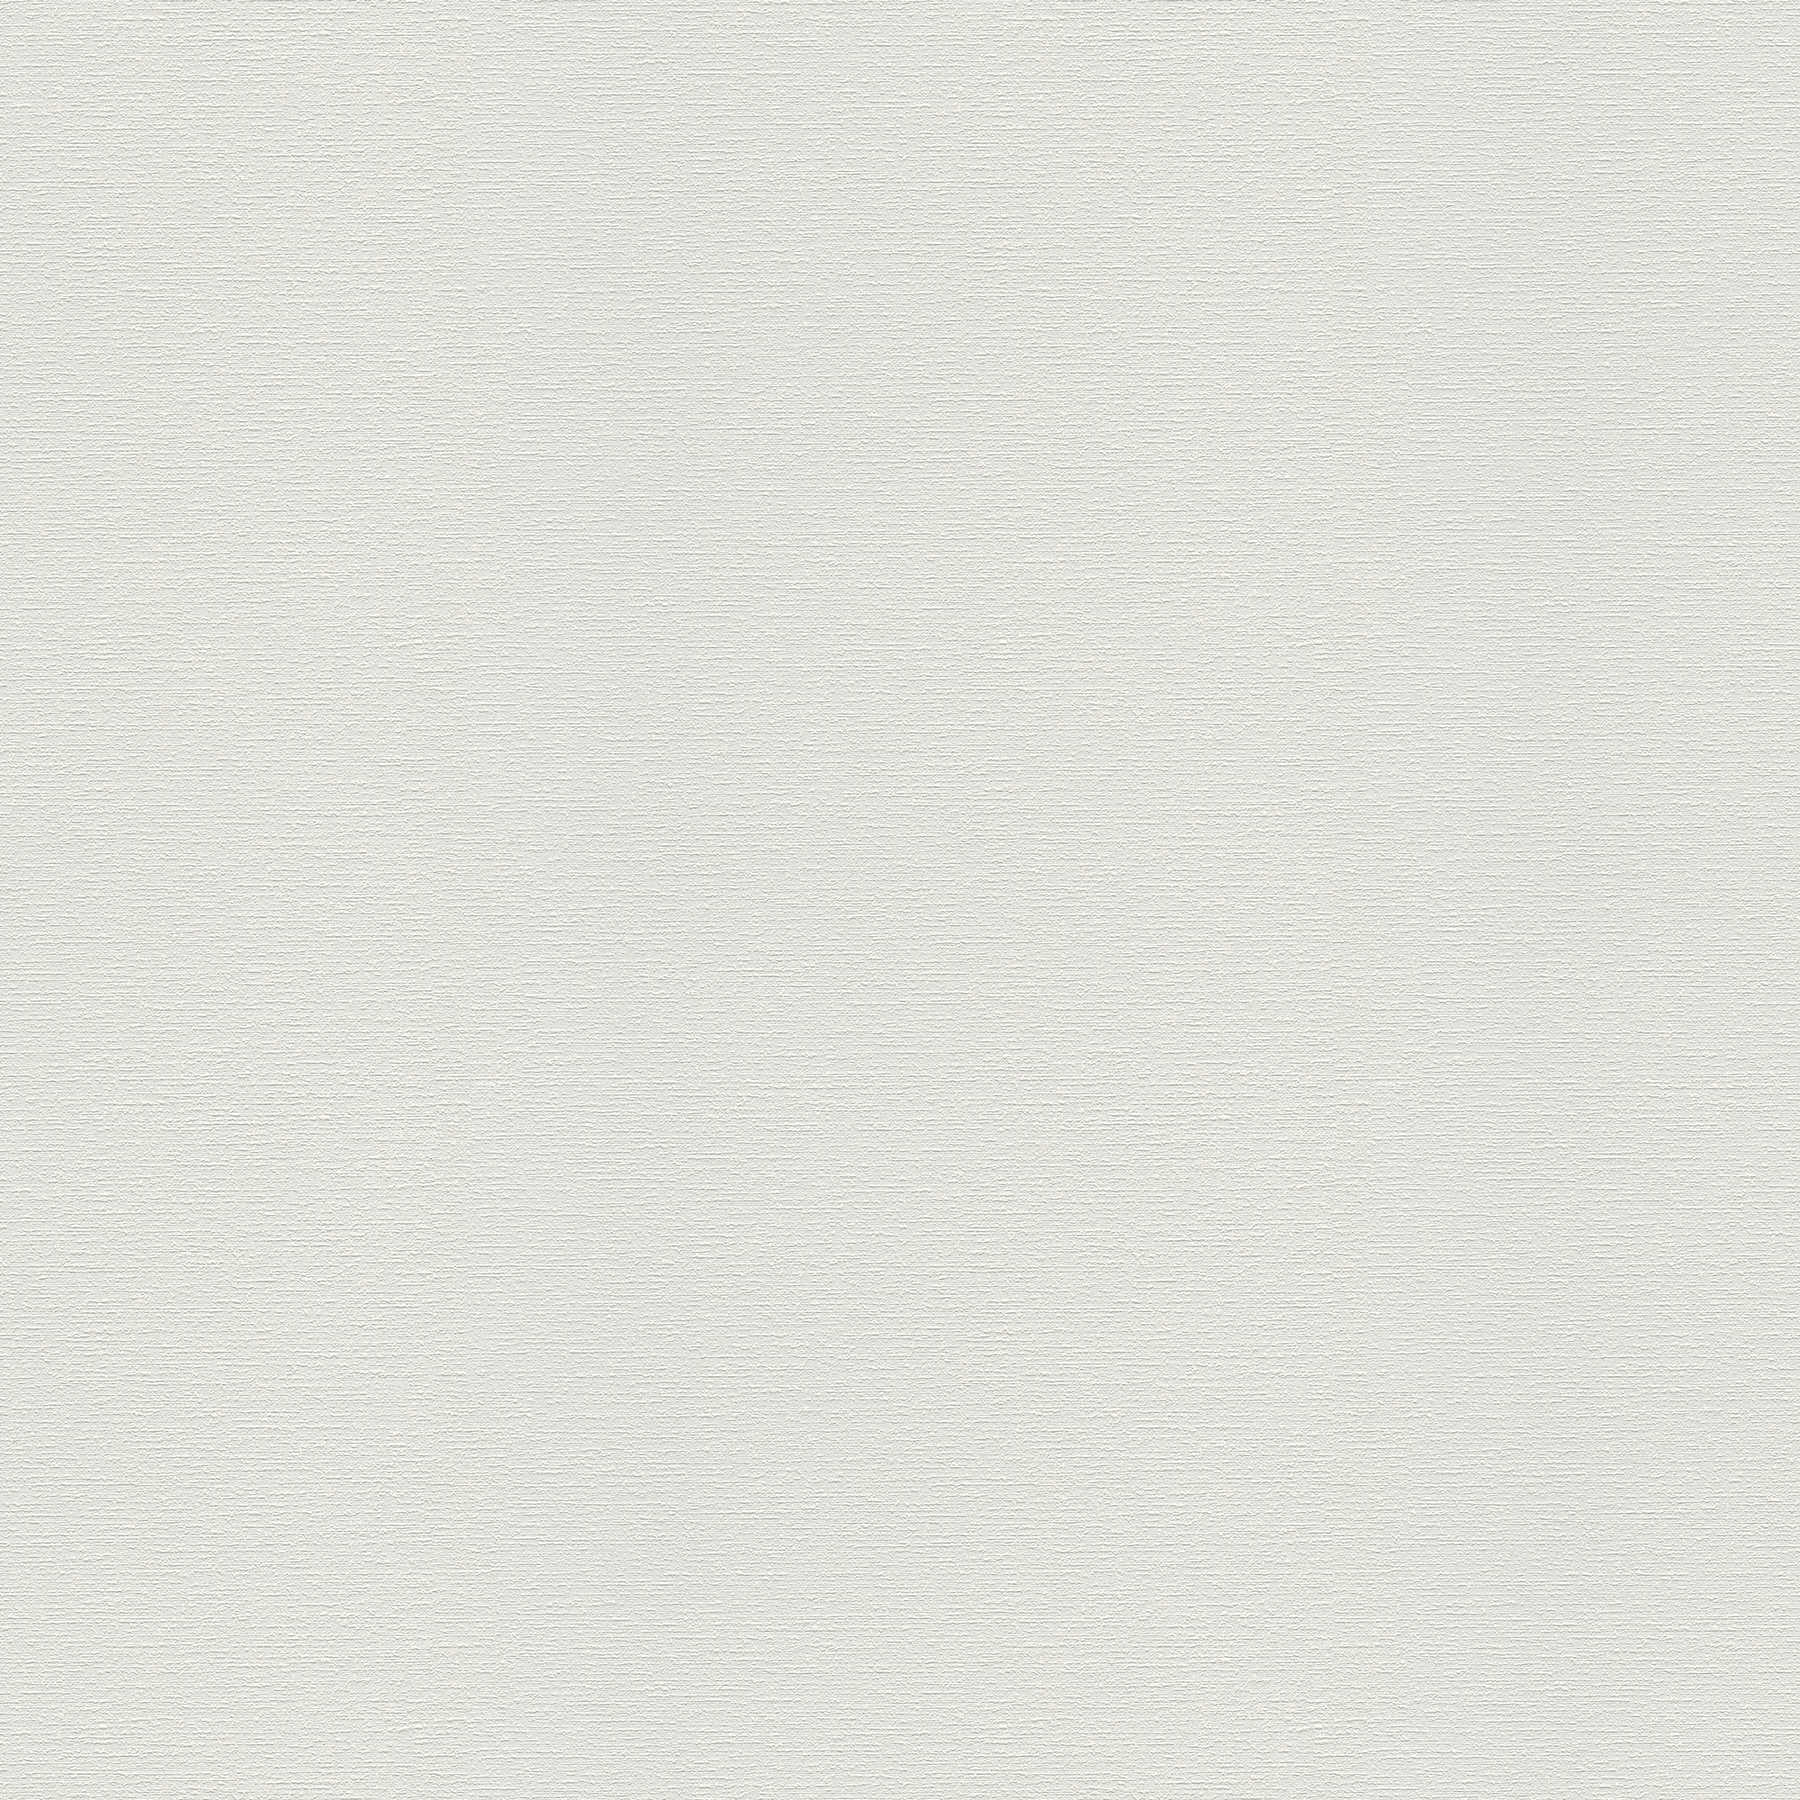 White non-woven wallpaper plain with texture pattern
